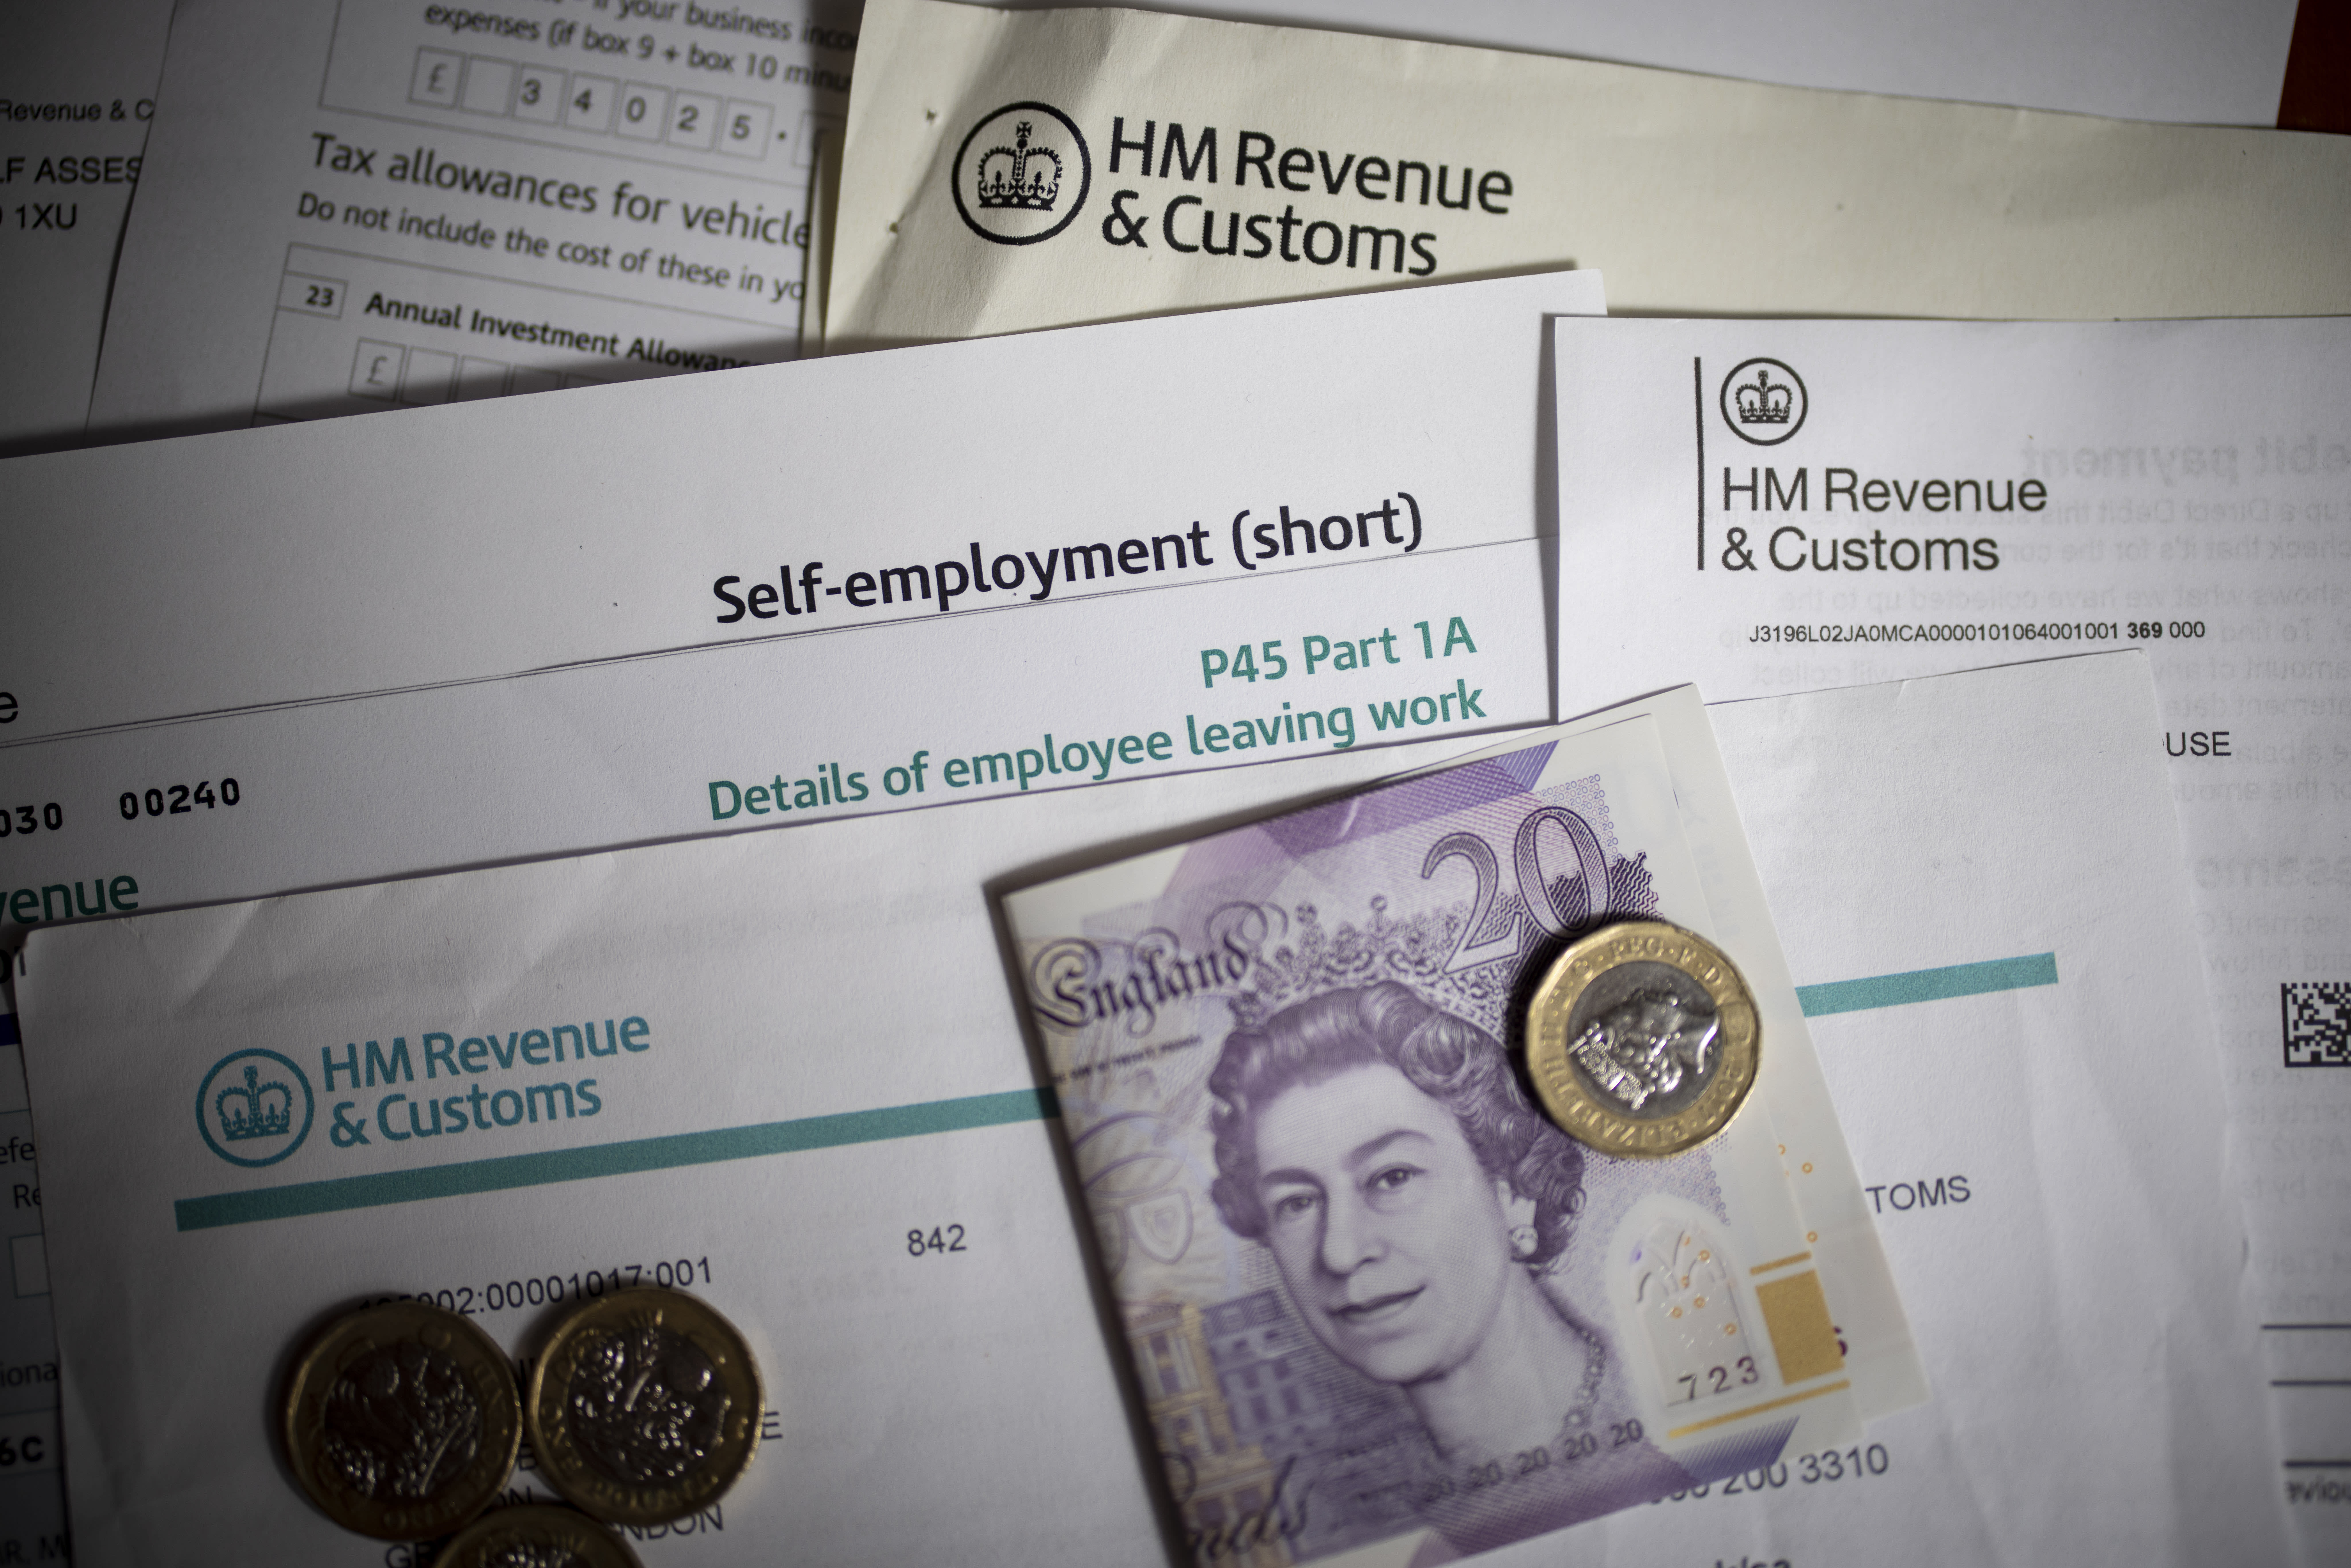 HMRC pays informants £400k for tax fraud tip-offs